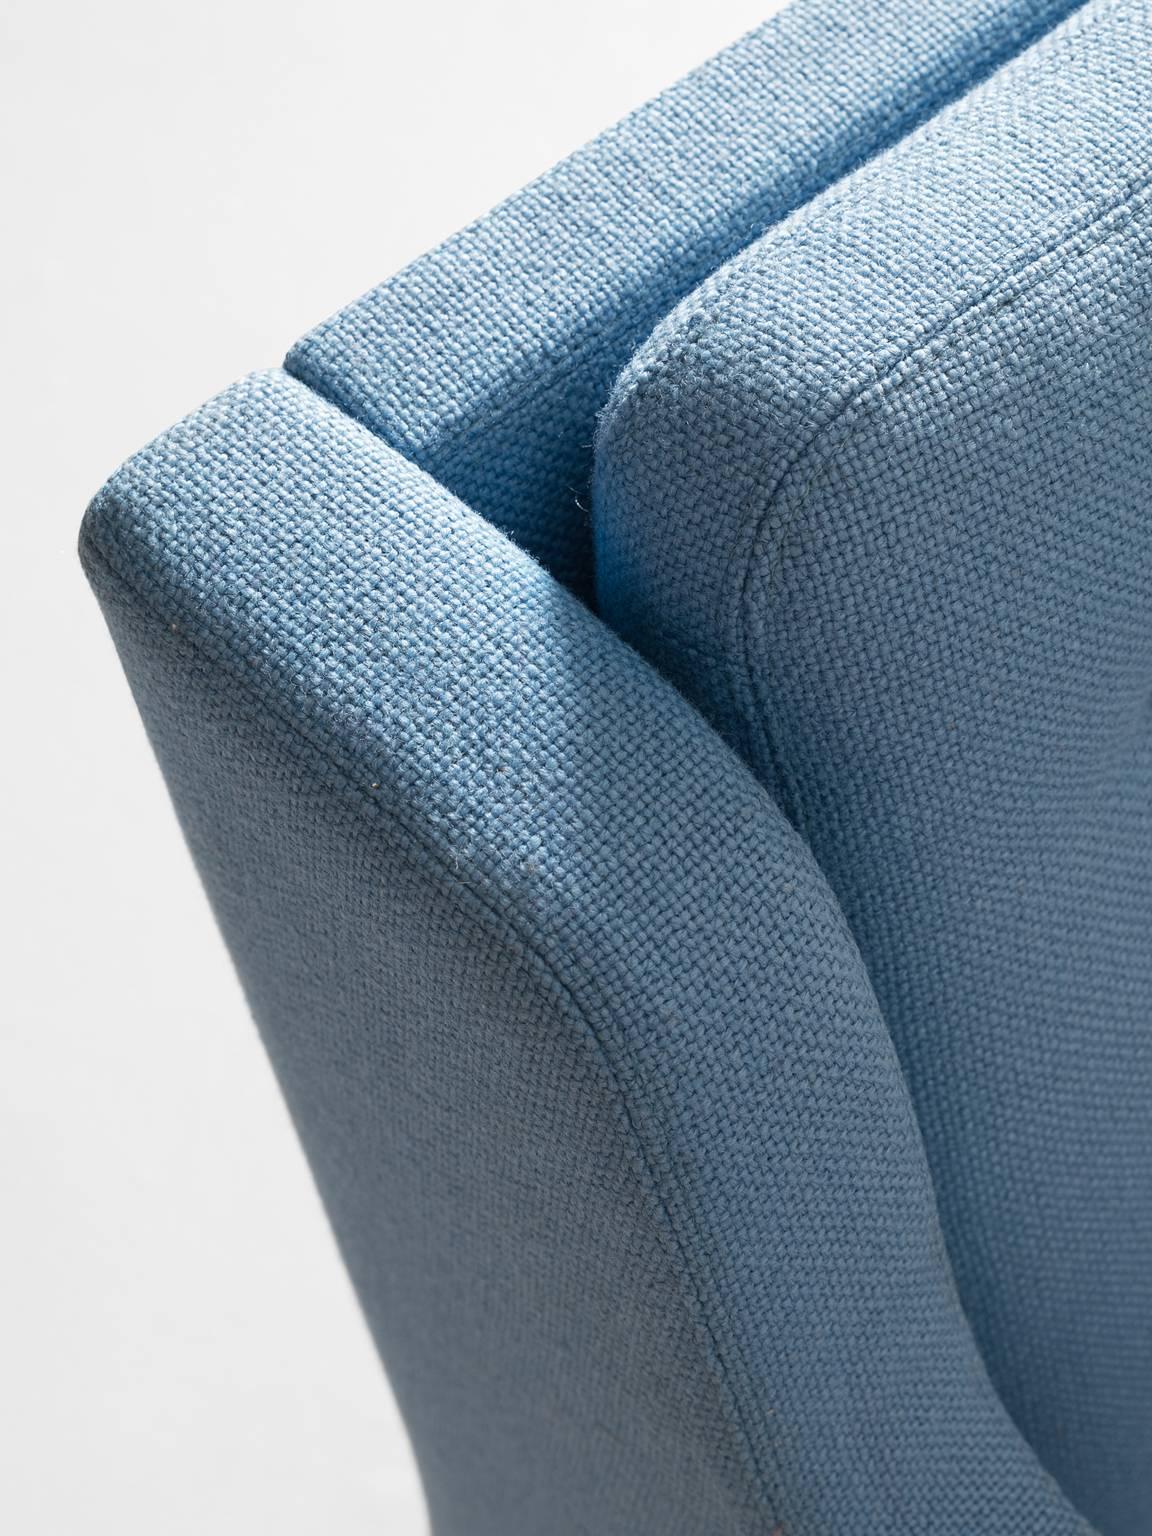 Erik Jørgensen Lounge Chair in Light Blue Fabric Upholstery 2